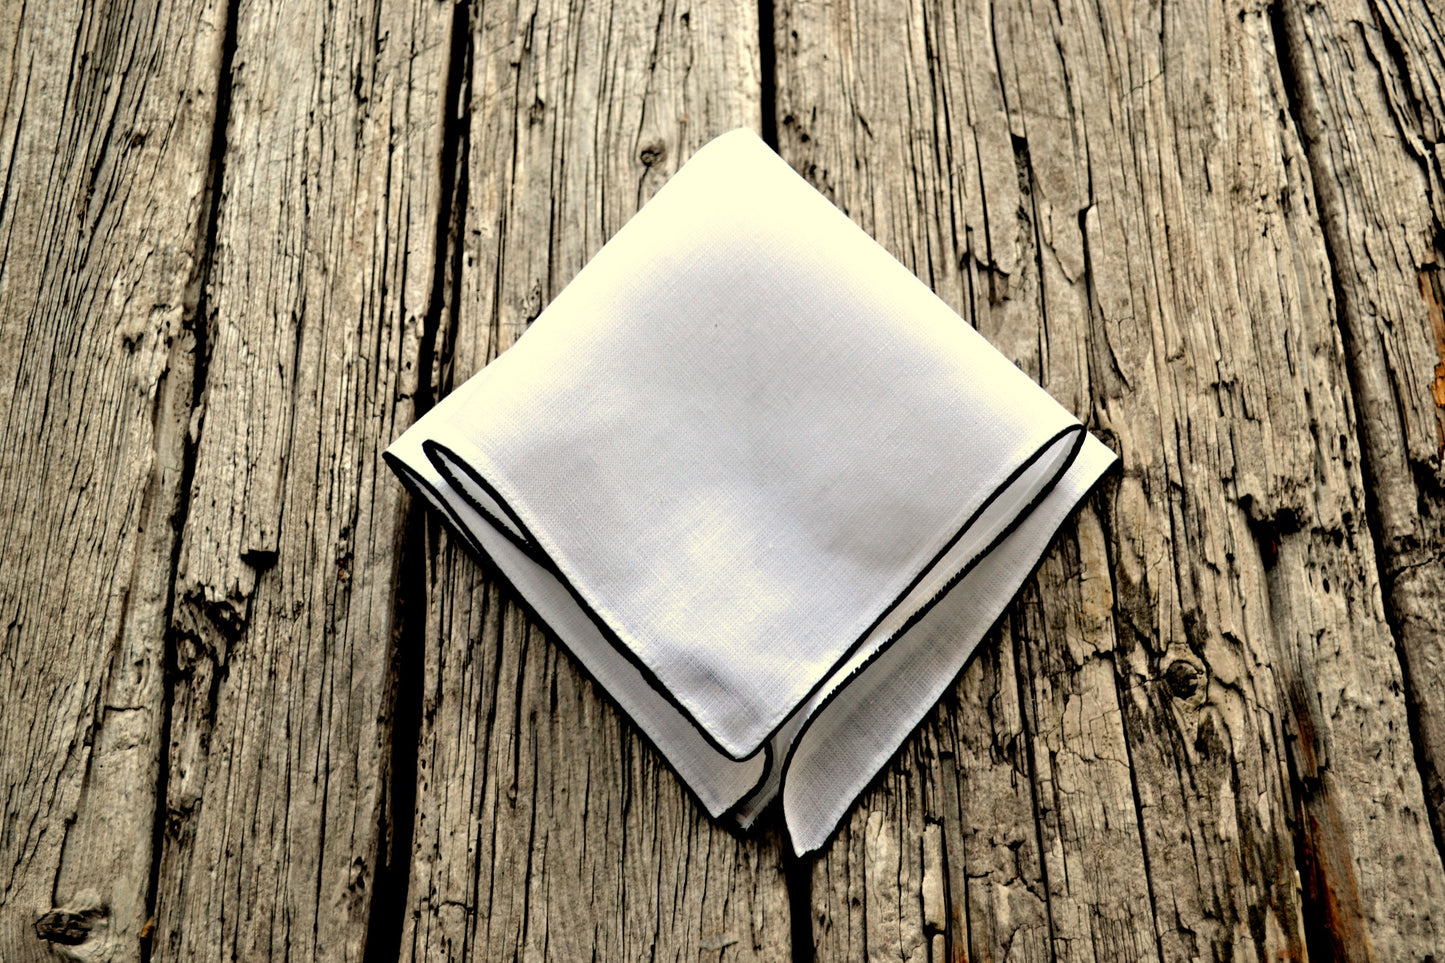 White linen handkerchief with black satin edge folded on wood background